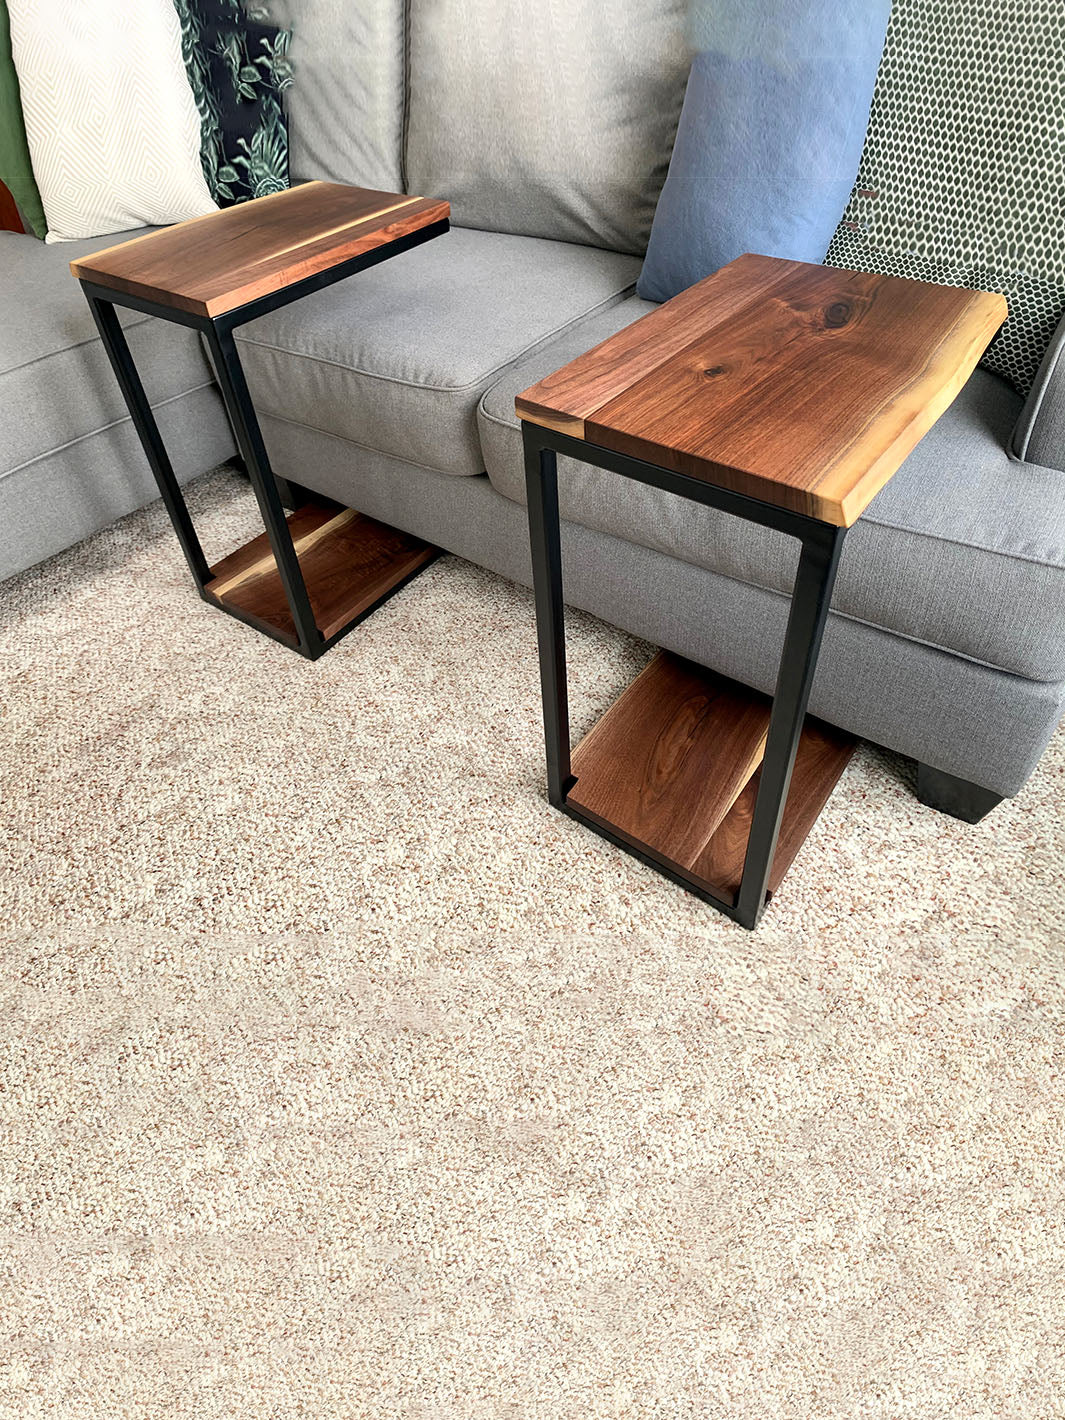 Floor Shelf Live Edge Walnut Wood C Table Earthly Comfort Side Tables 1439-4